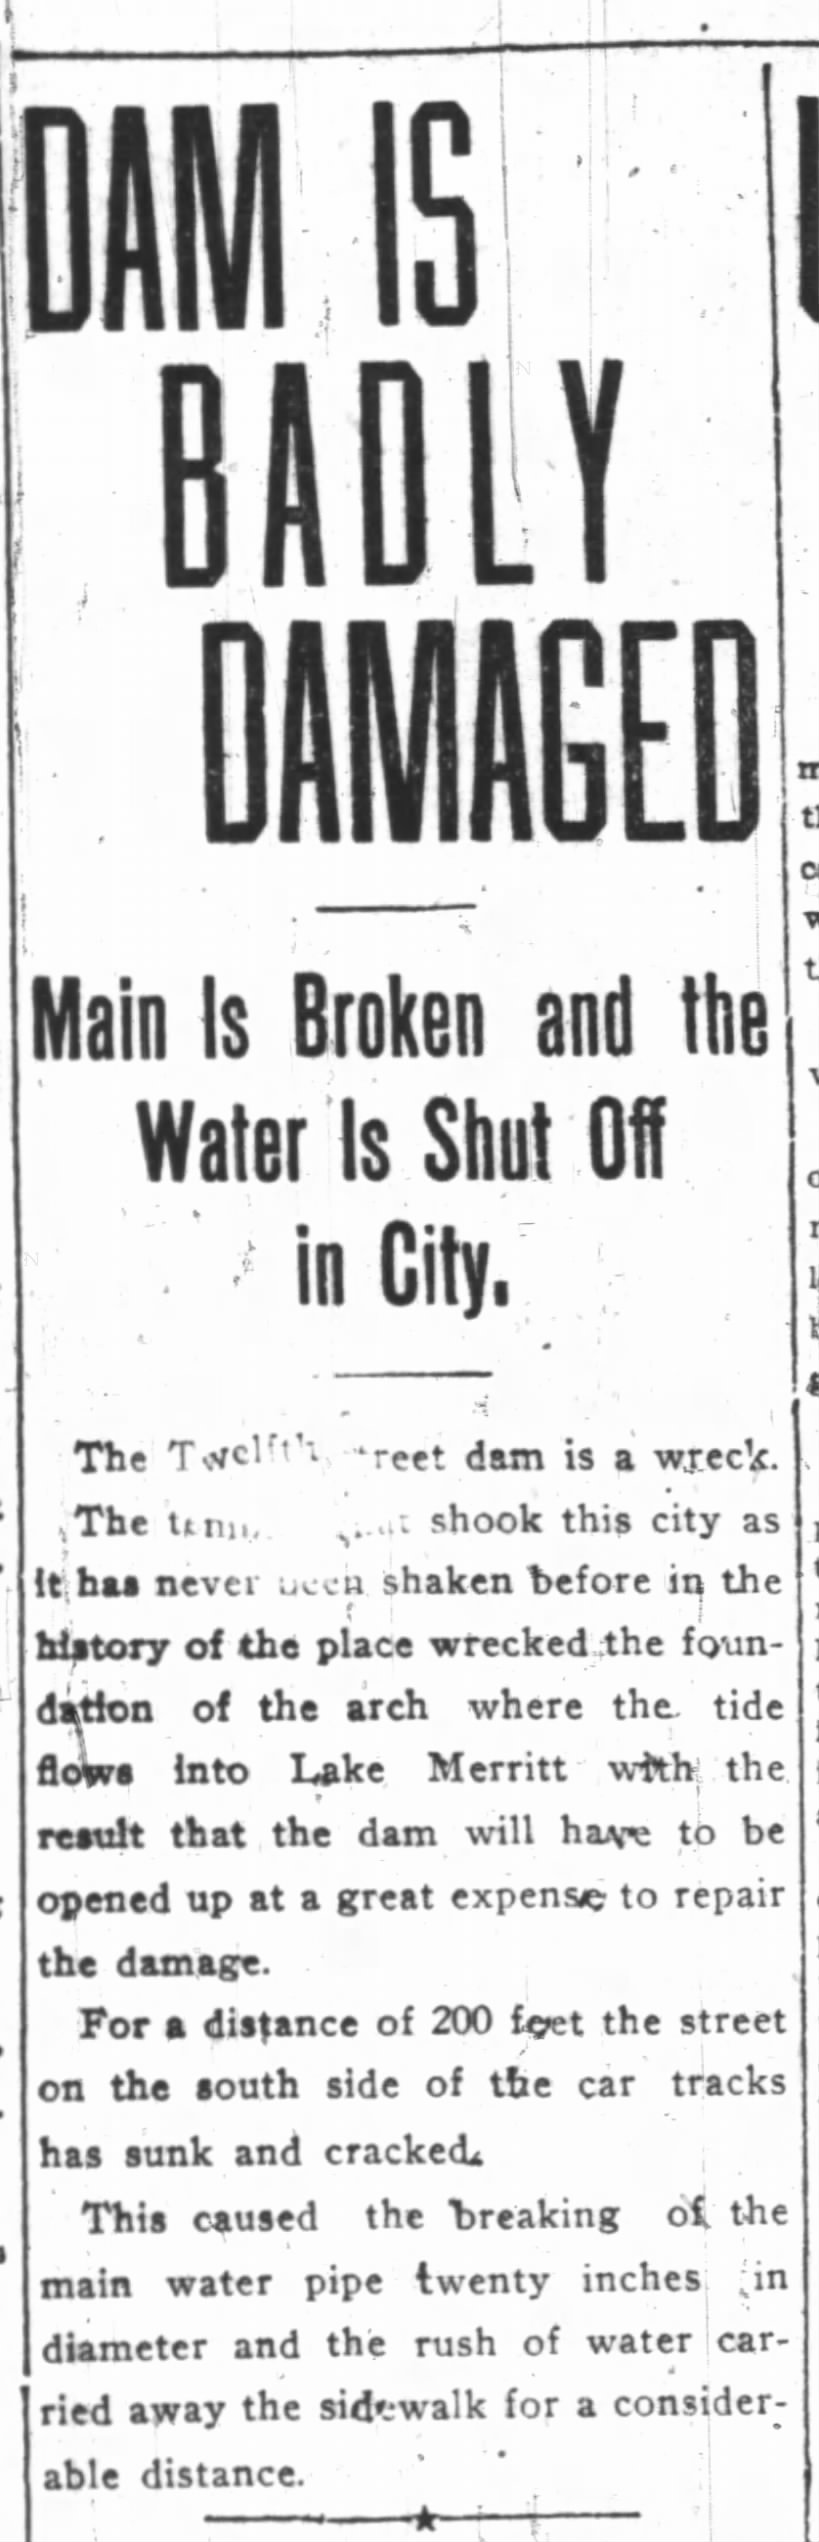 12th St. Dam damaged in 1906 earthquake